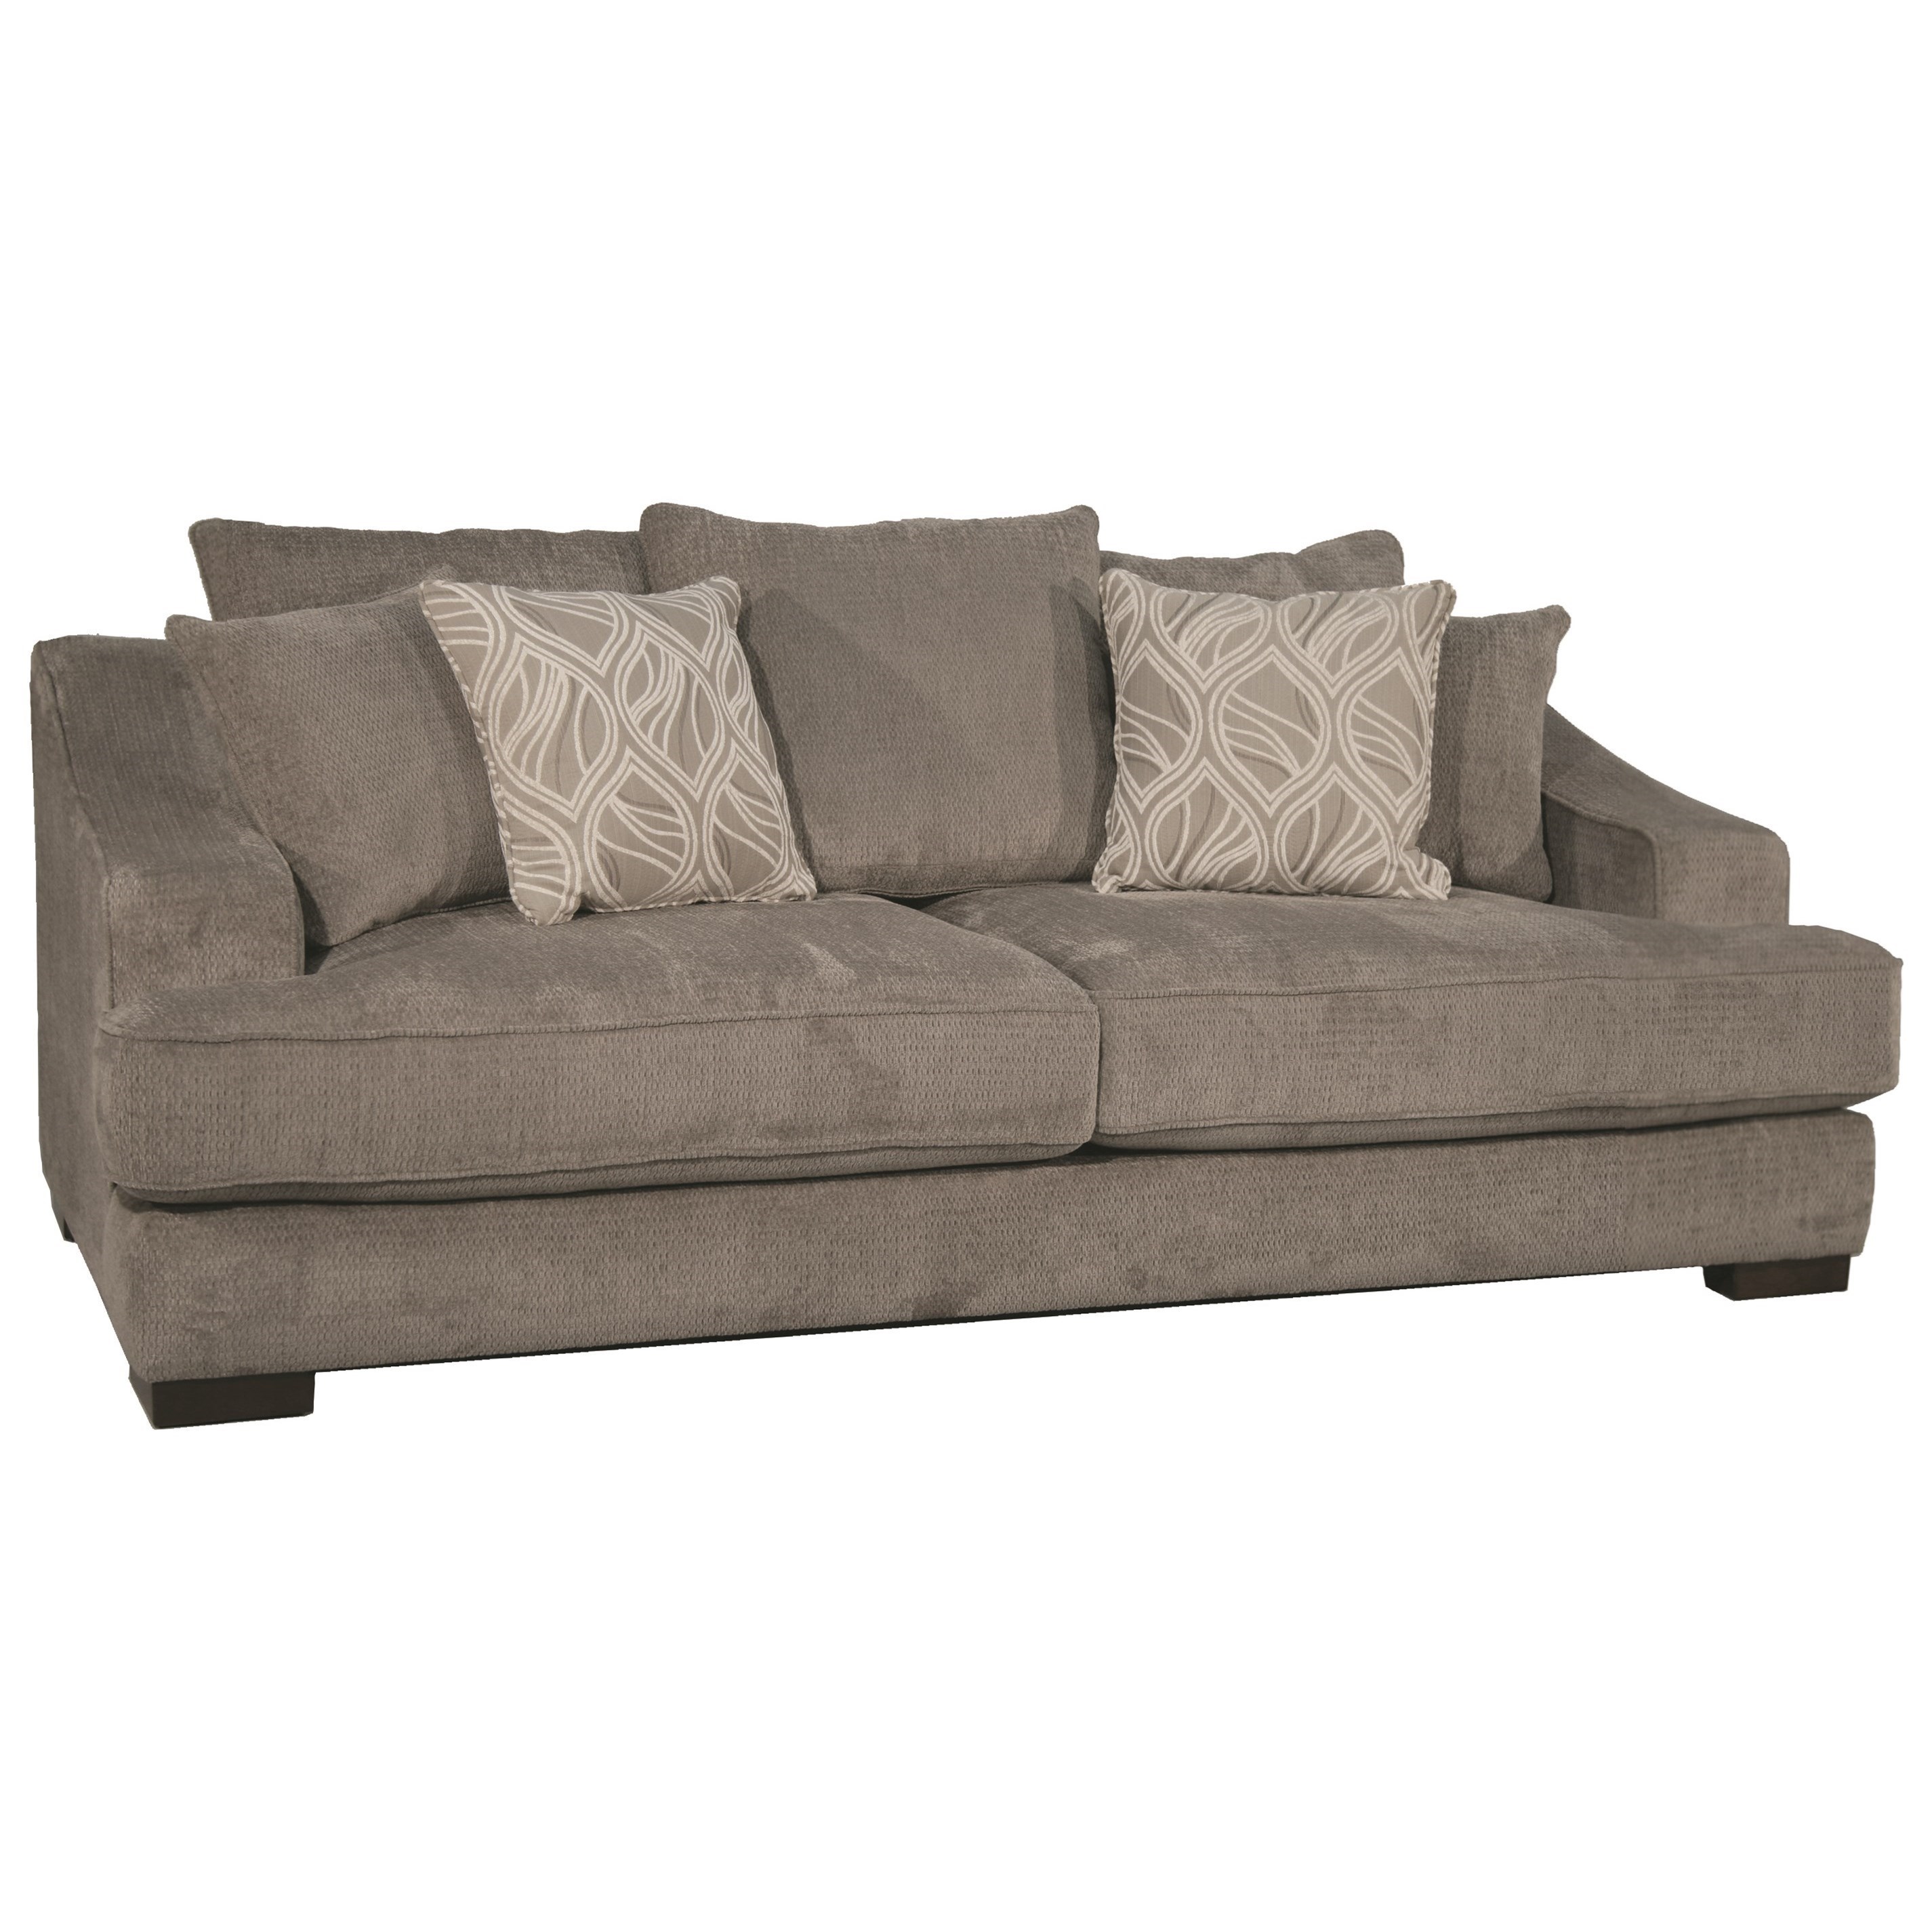 Avalon Casual 2-Seater Deep Sofa by Fairmont Designs